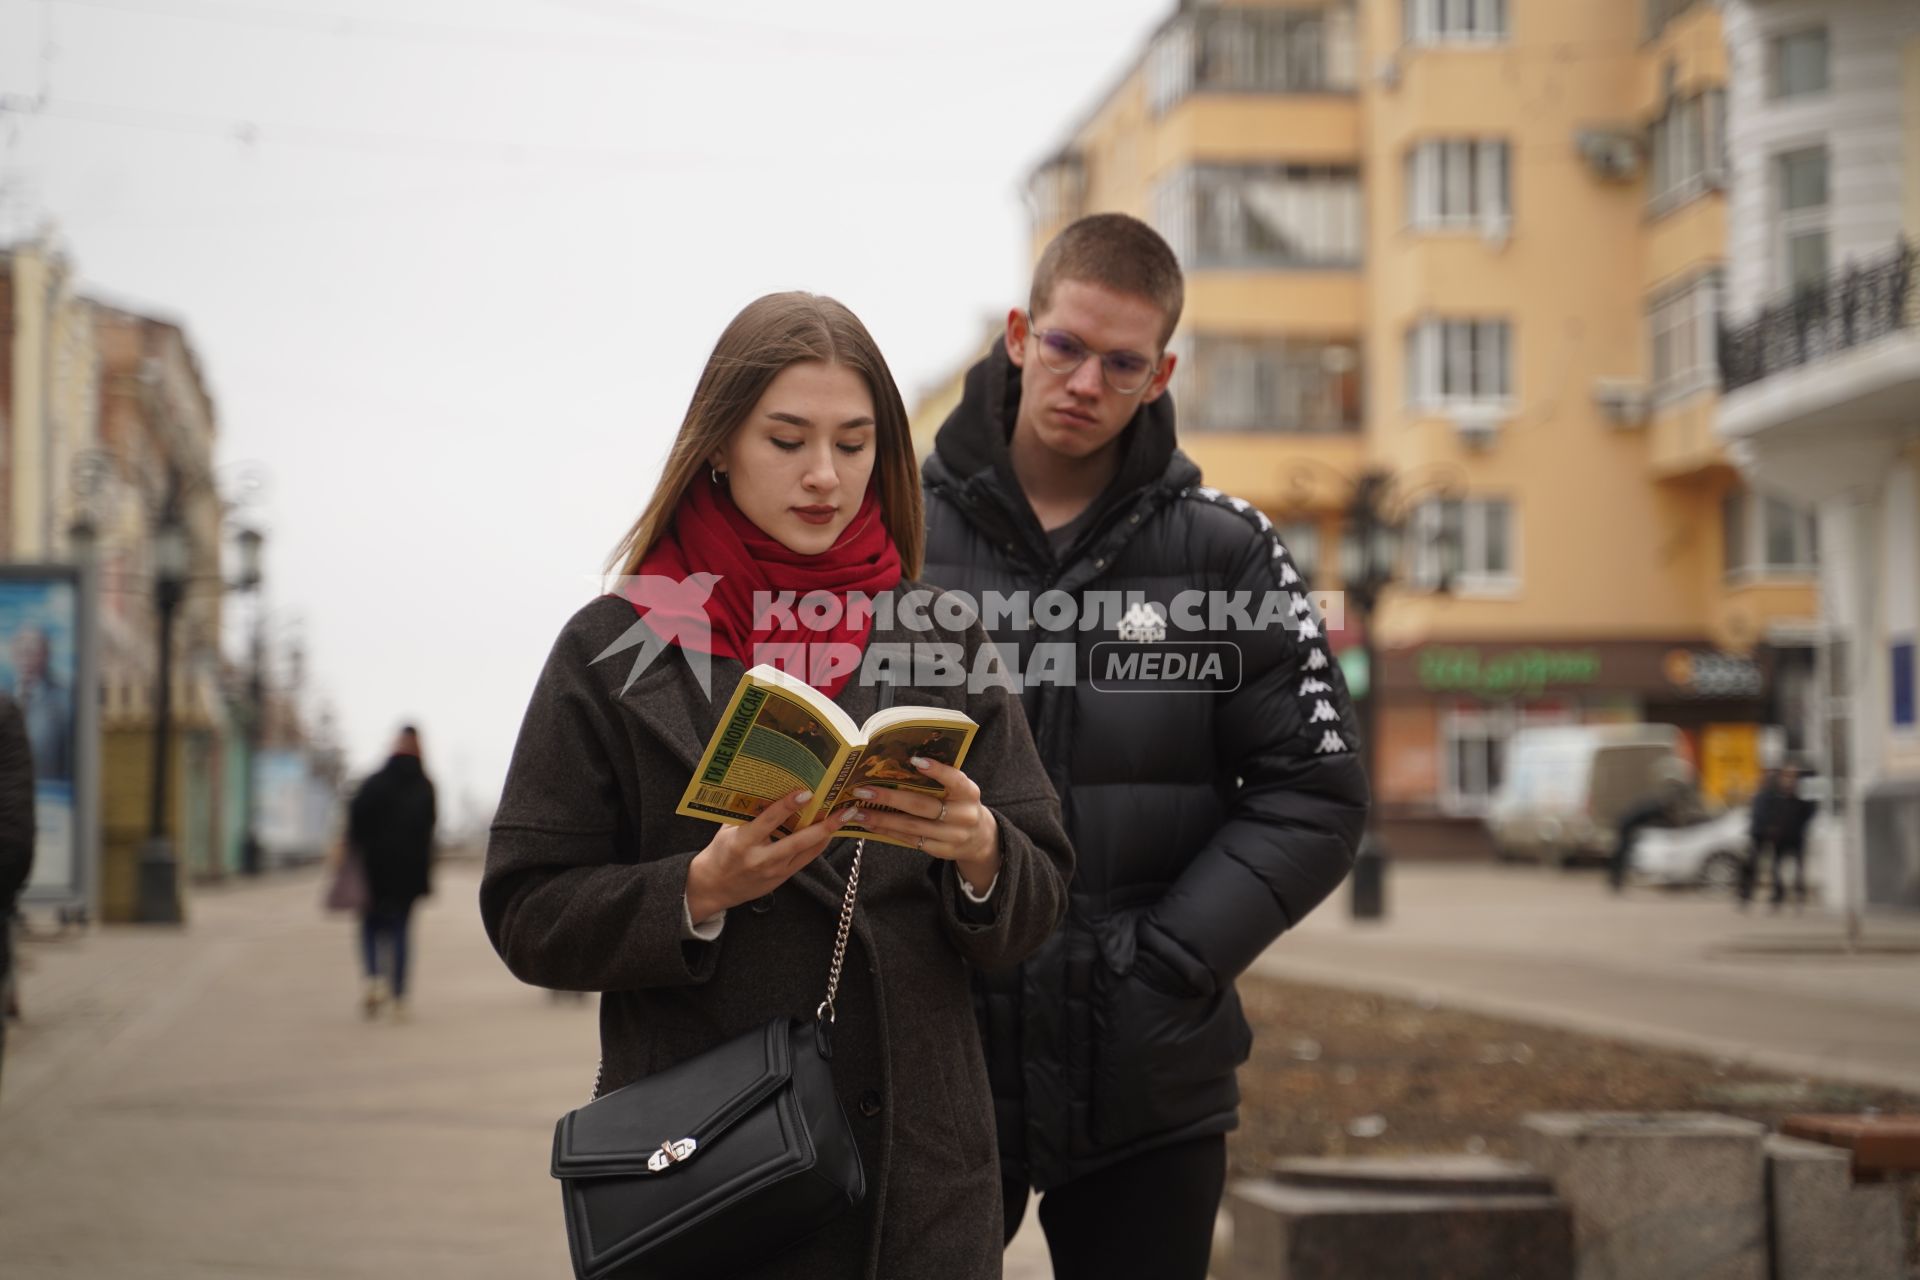 Самара. Юноша и девушка читают книгу Ги де Мопассана на улице.